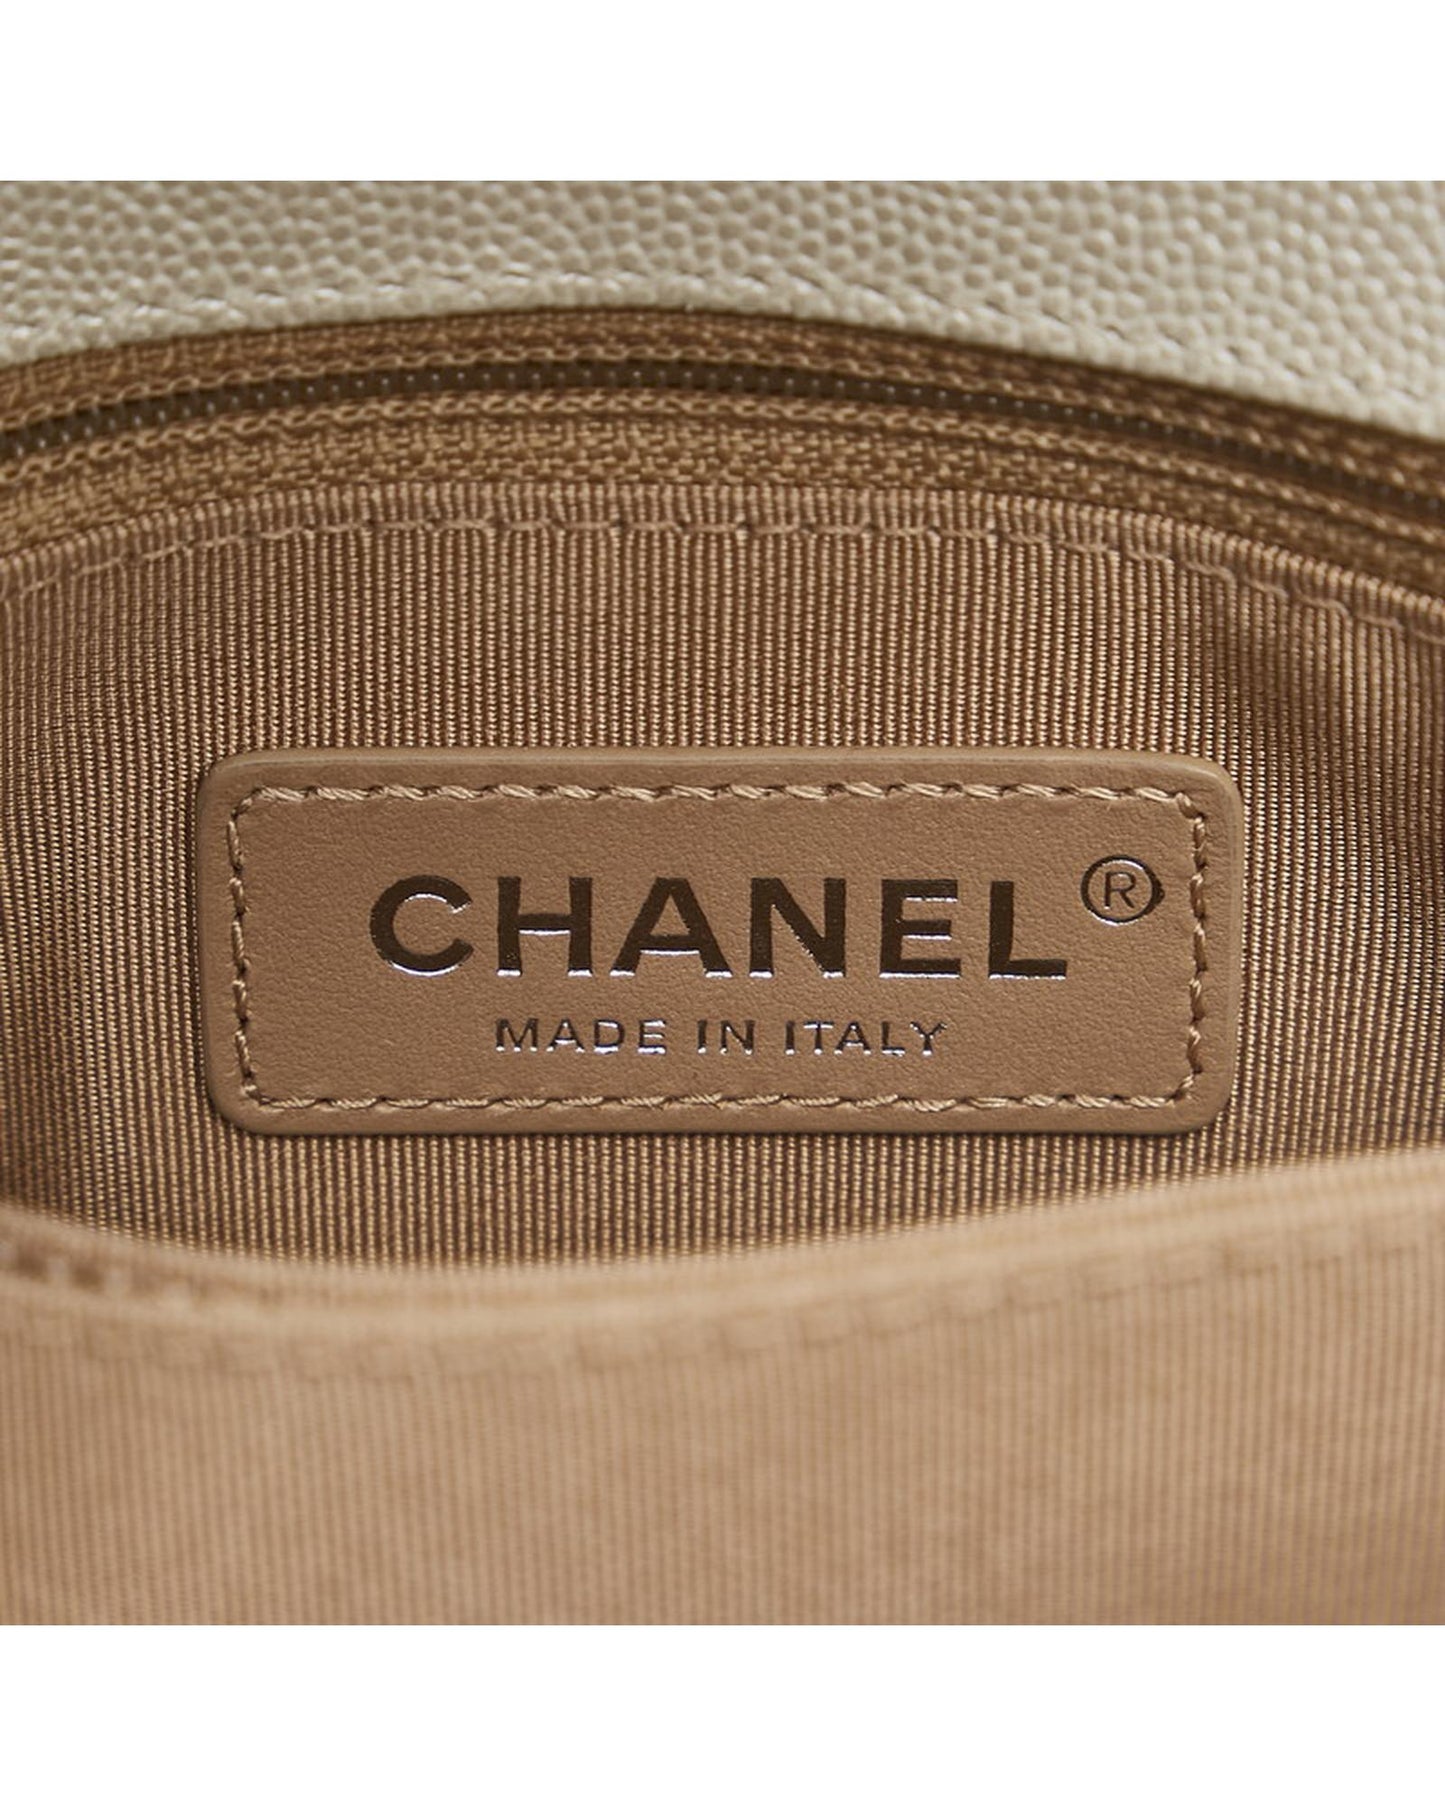 Chanel Women's Chevron Caviar Handbag with CC Logo in White